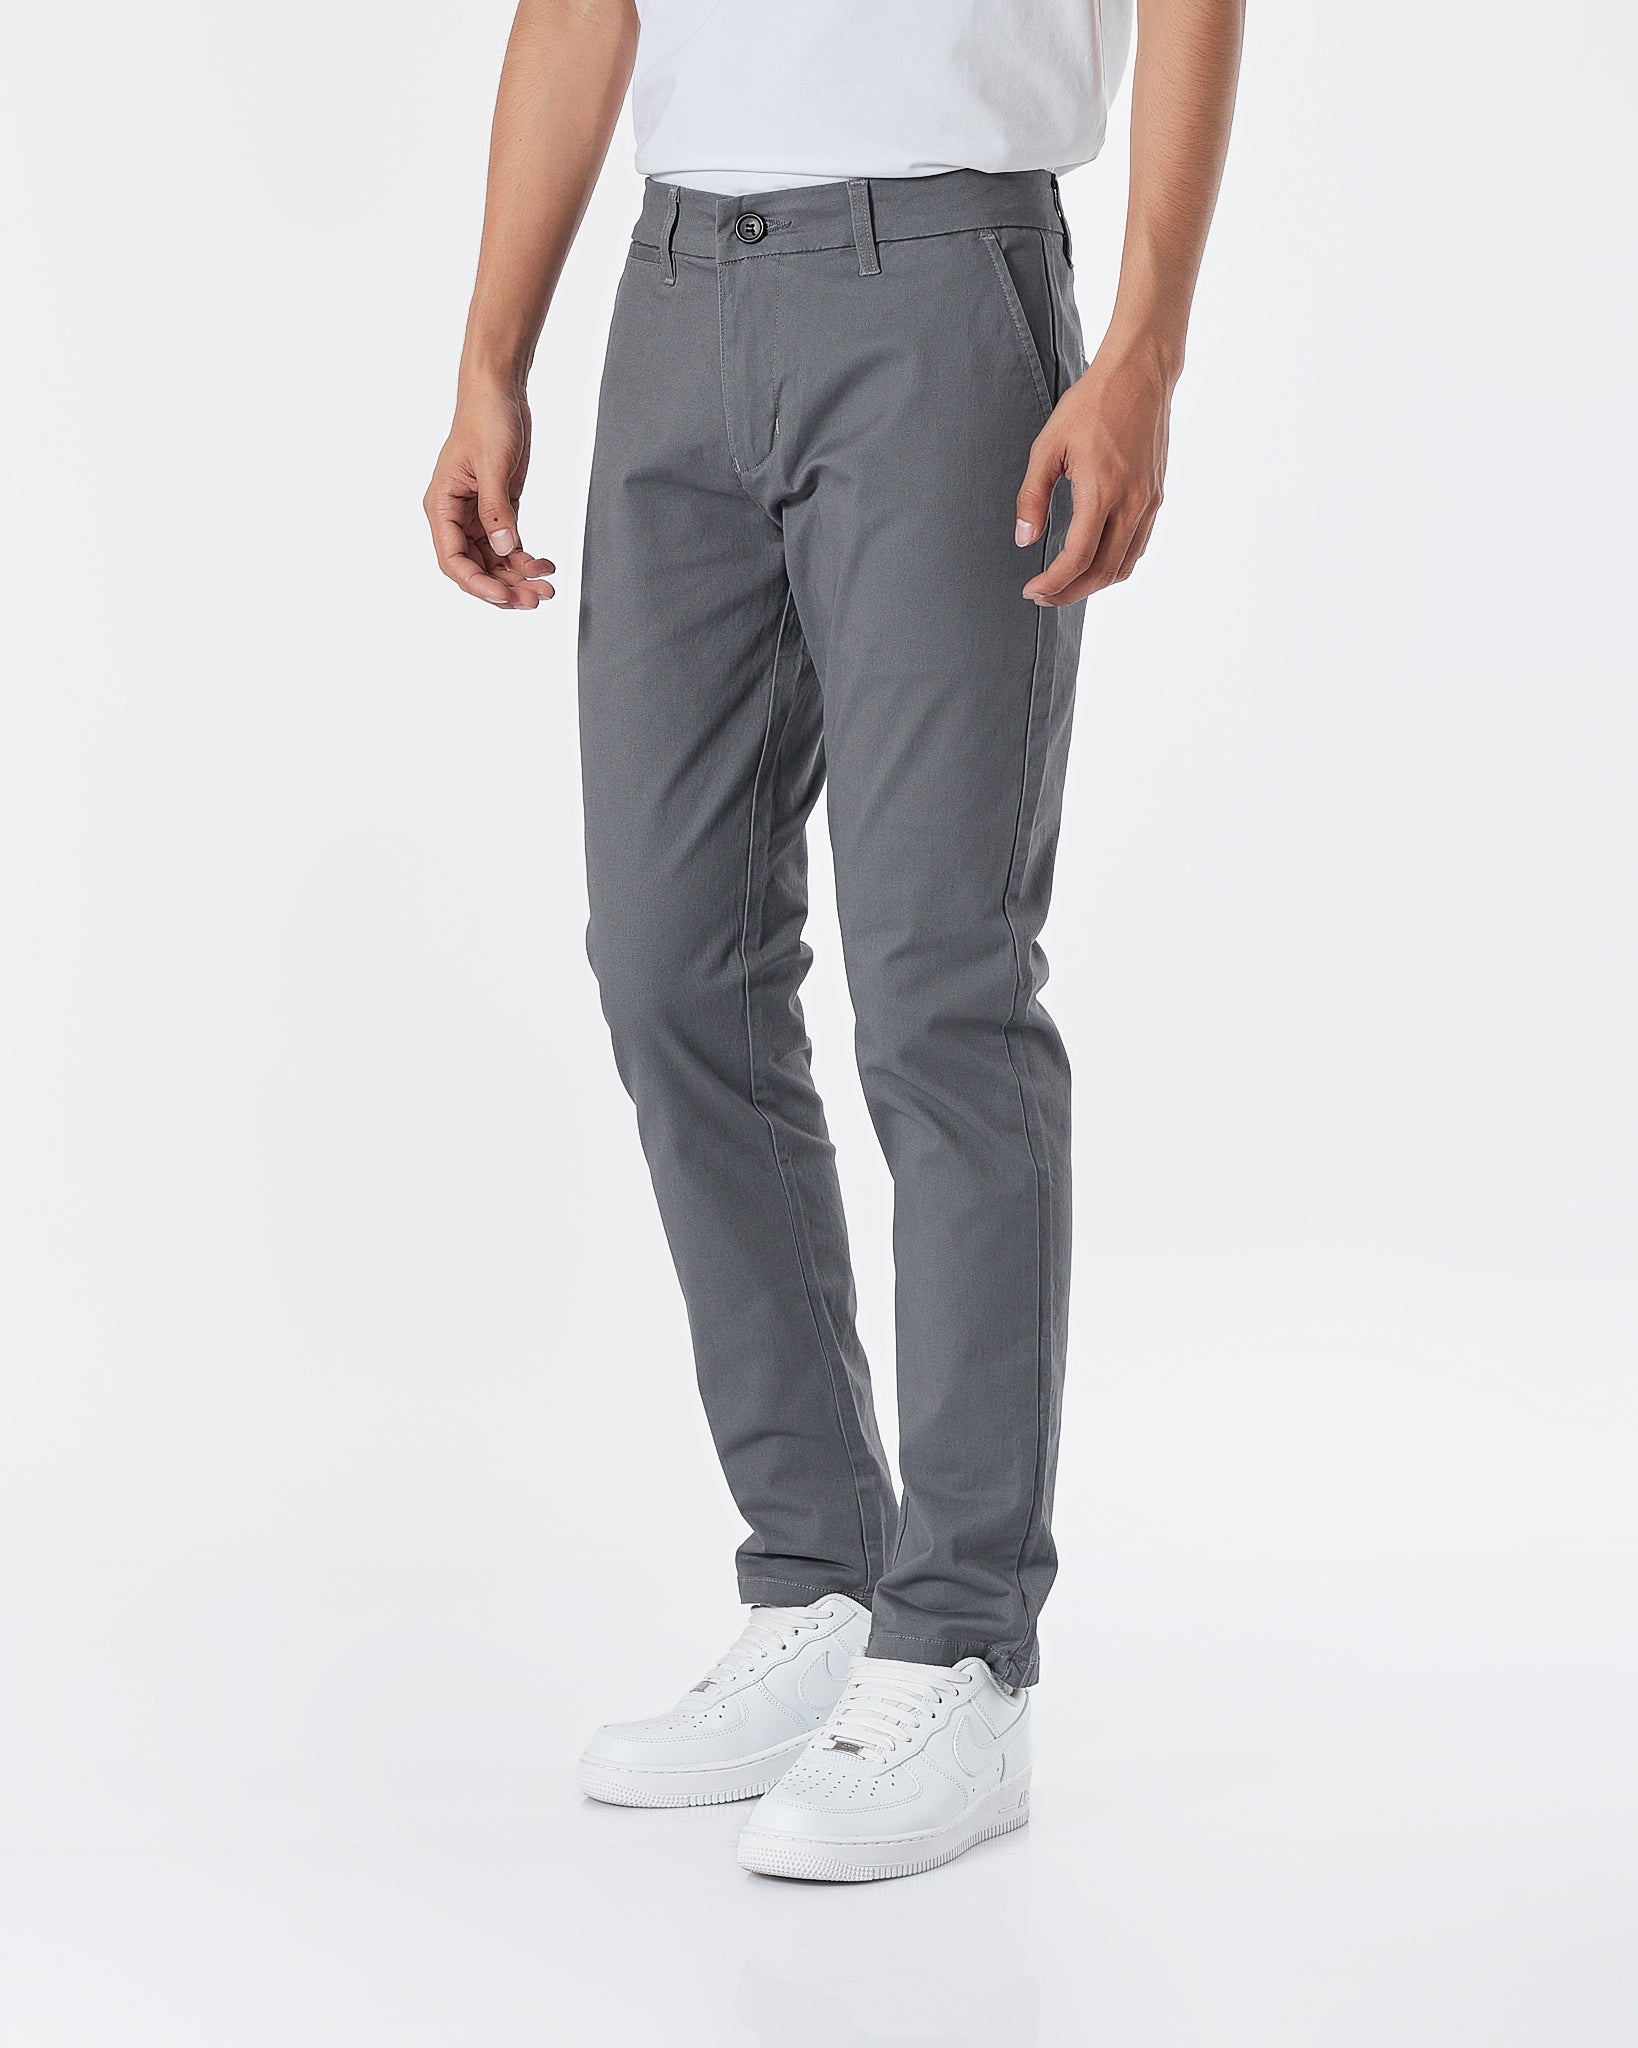 LAC Plain Color Men Dark Grey Khaki Pants 22.90